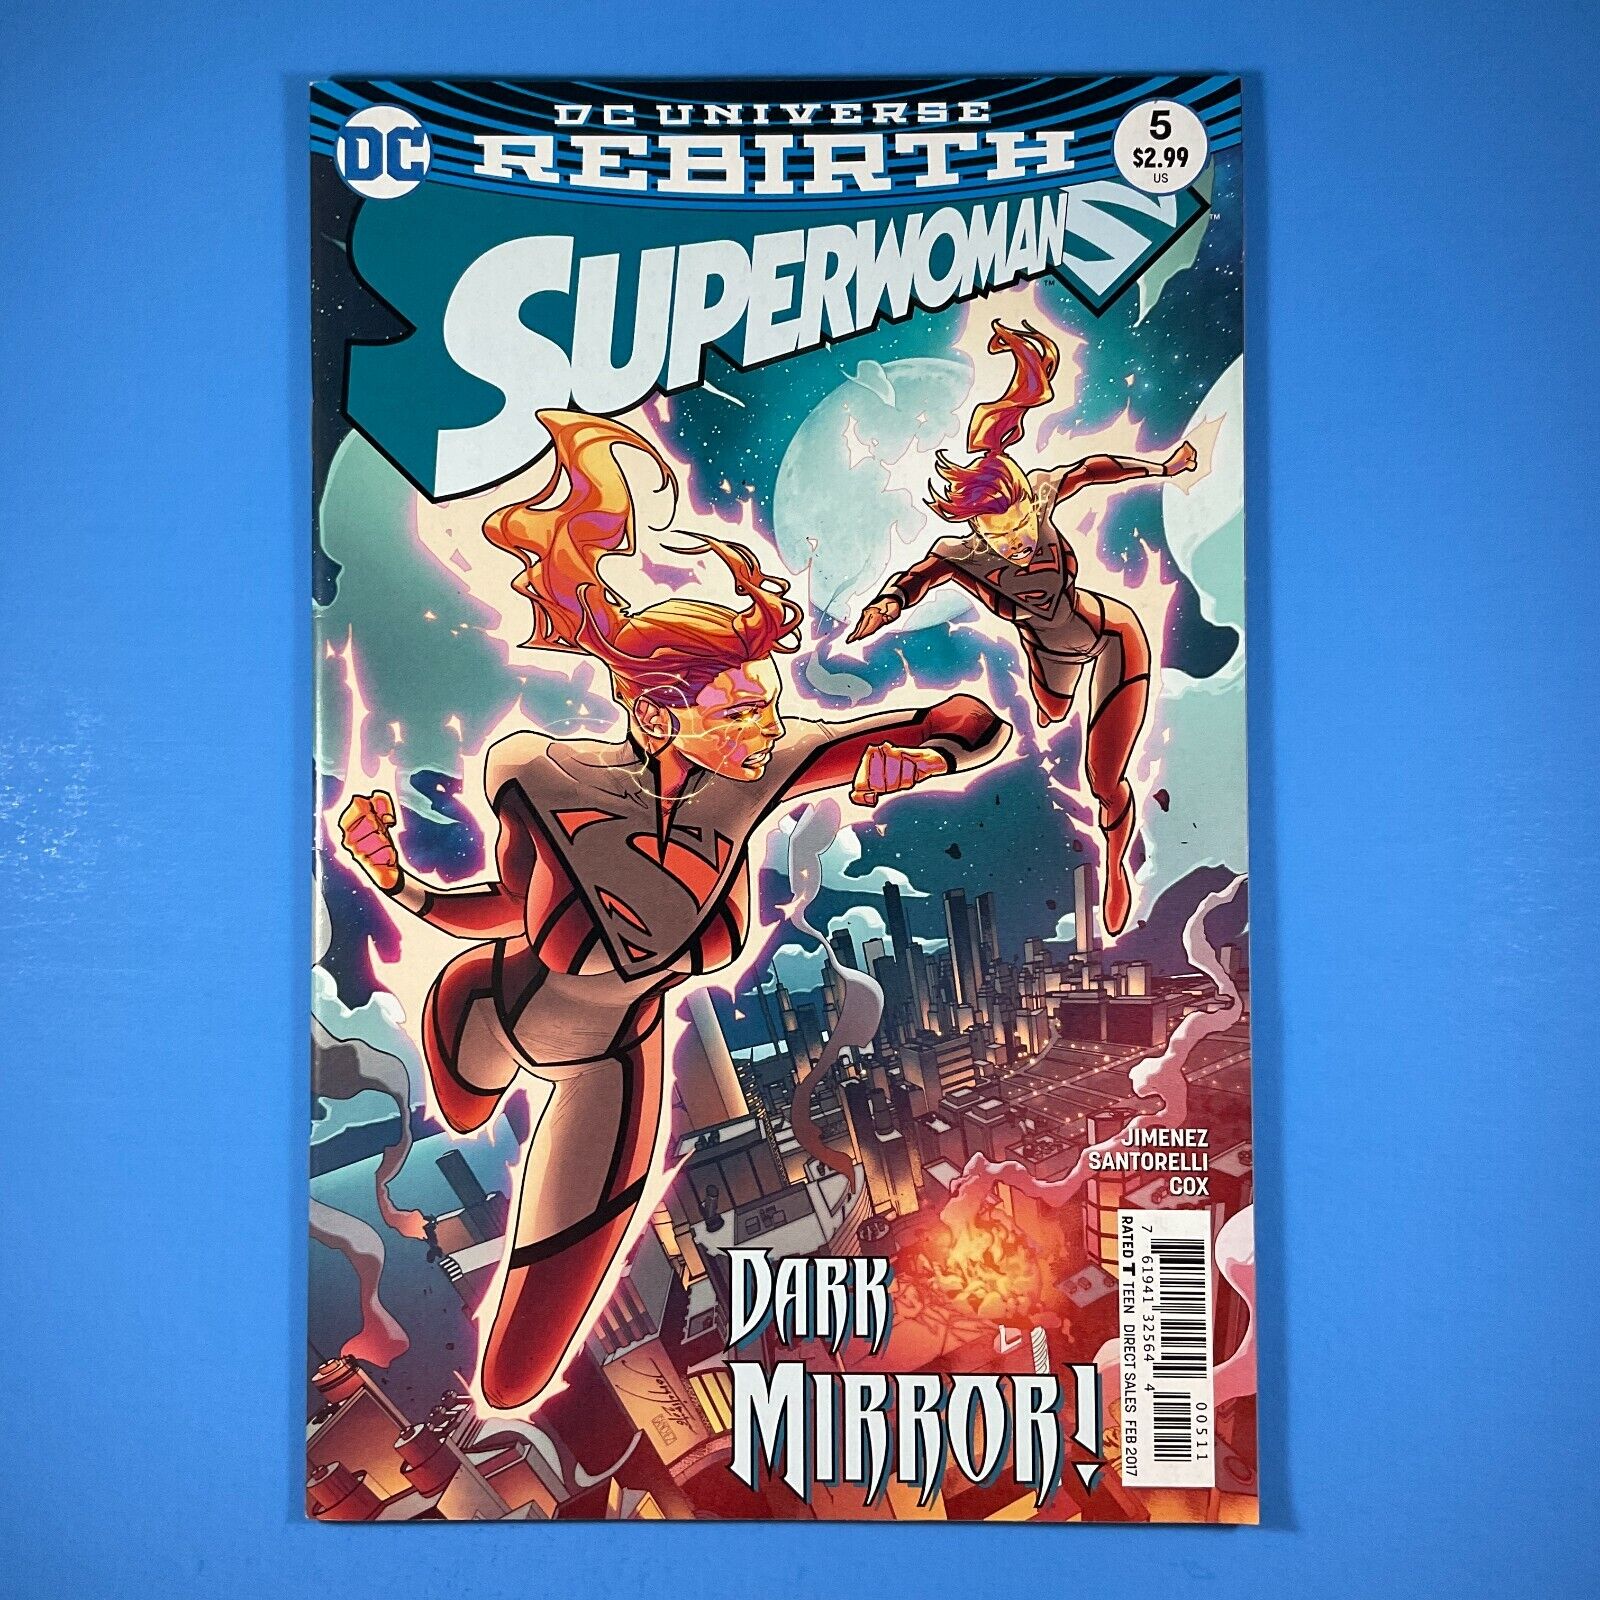 Superwoman #5 DC Comics Rebirth 2017 Dark Mirror 